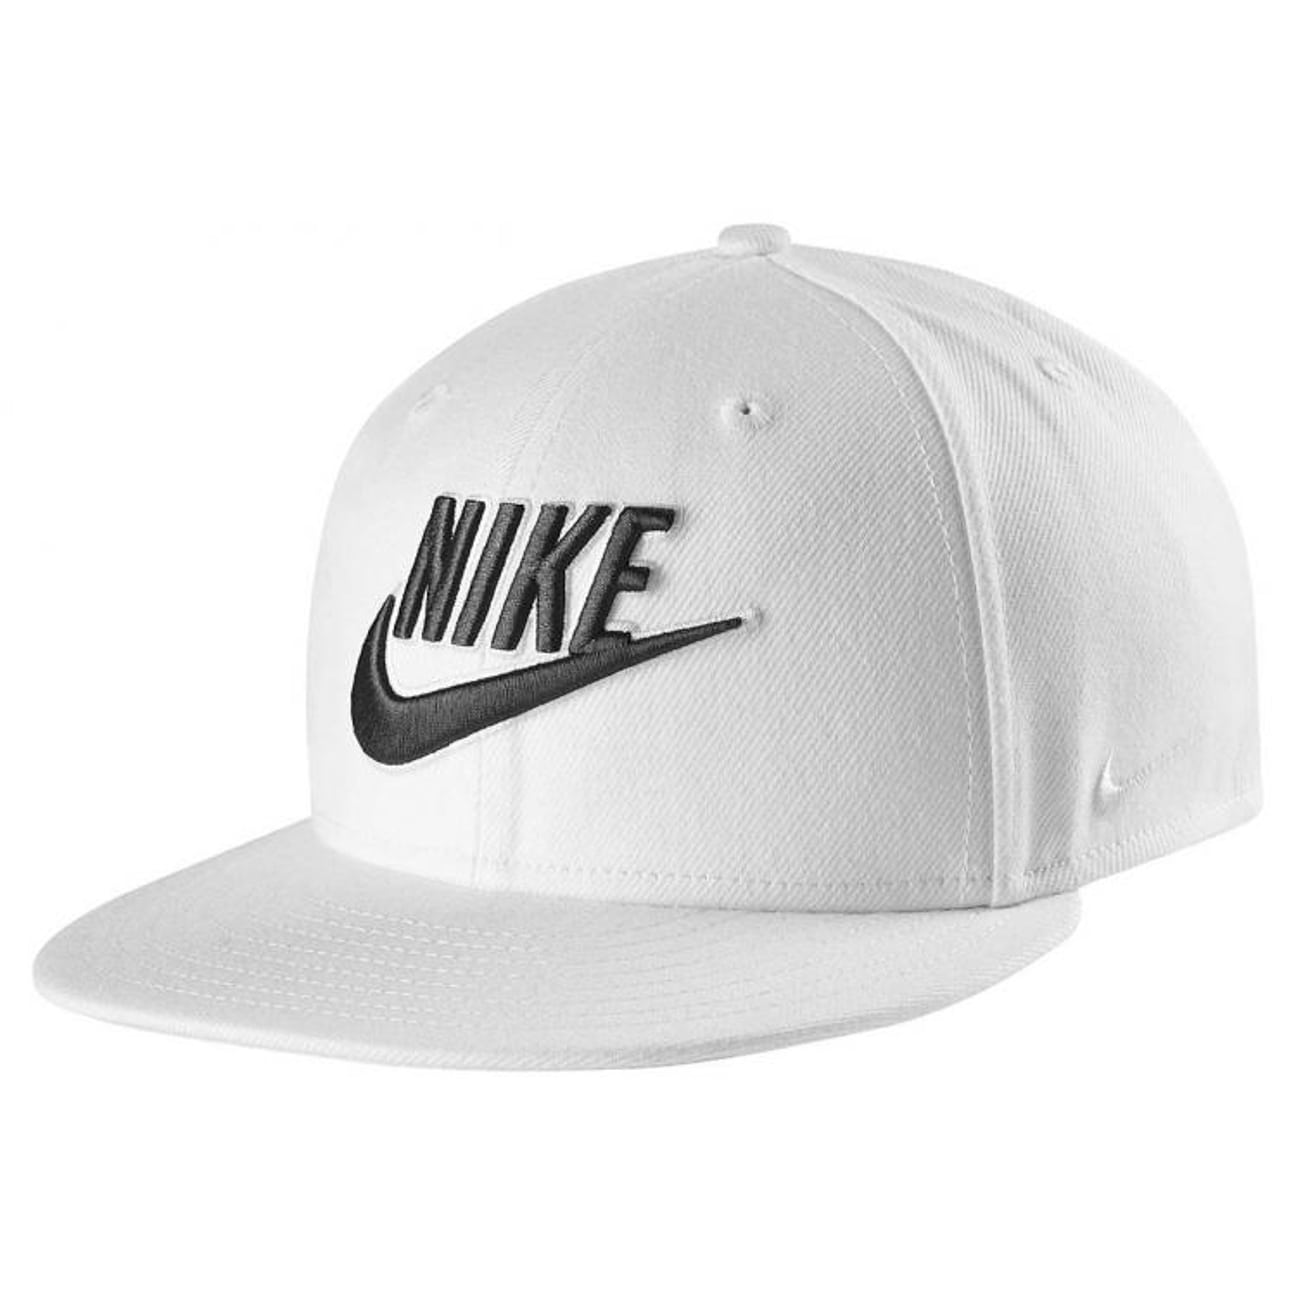 True Snapback Cap by Nike, EUR 21,90 --> Hats, caps & beanies shop ...